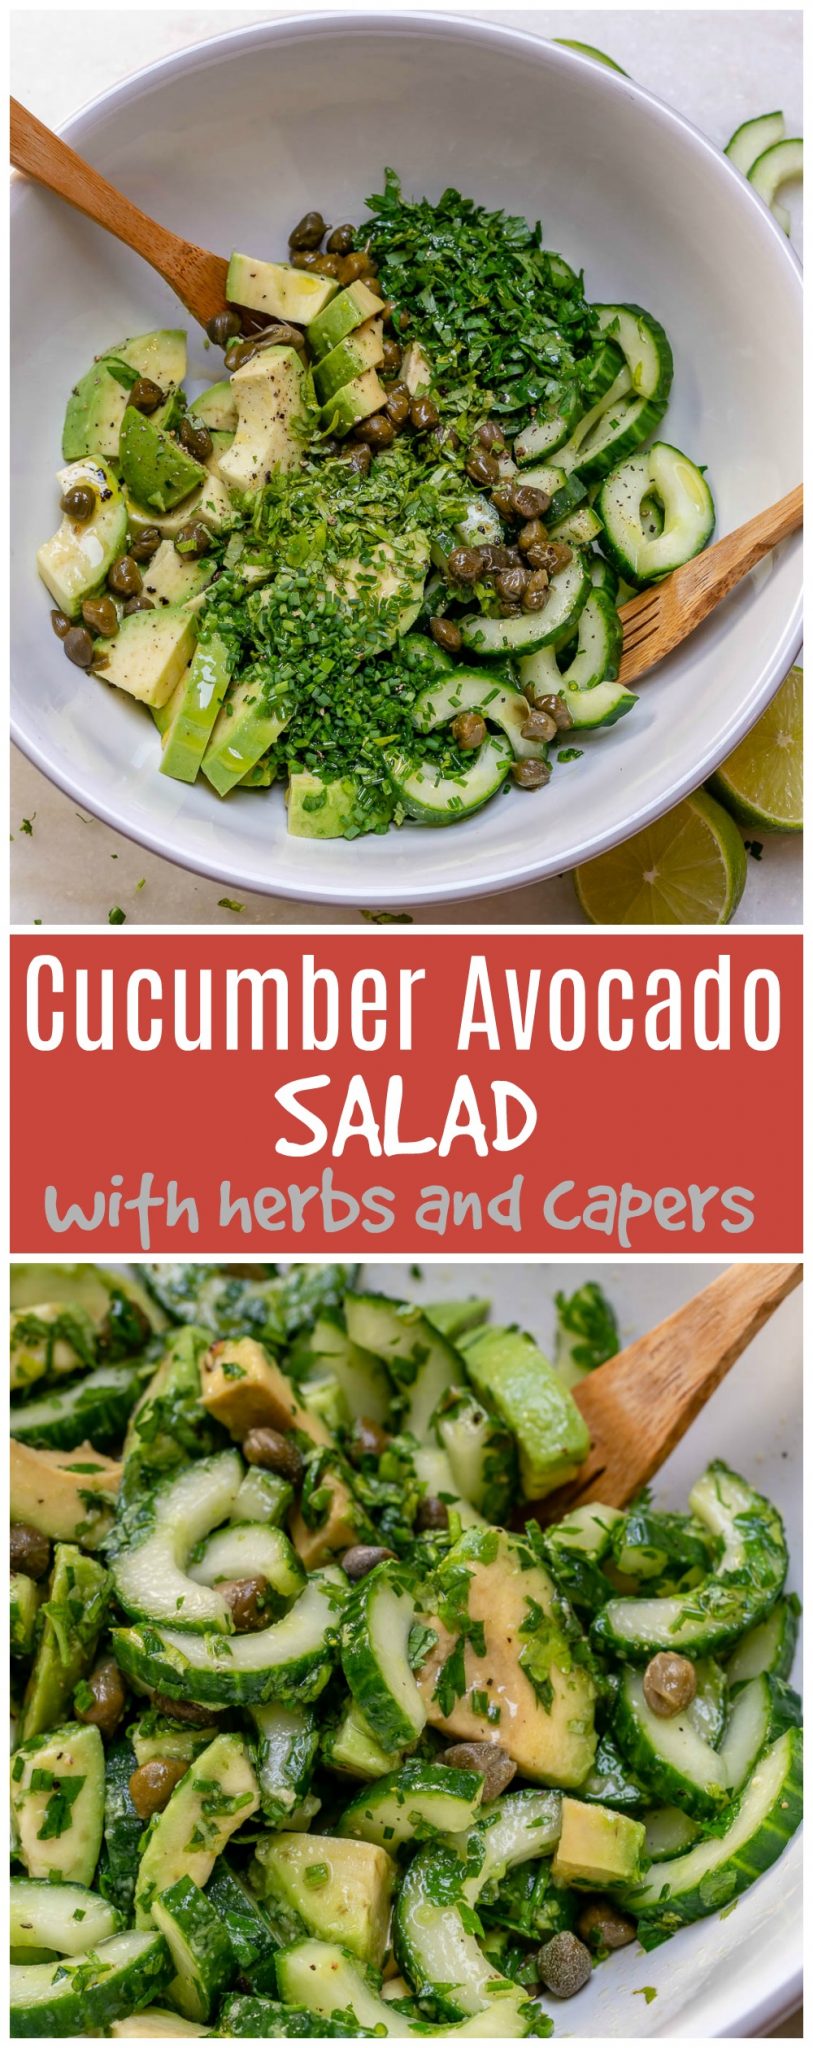 Healthy Avocado Fresh Herbs Capers Salad Lunch Ideas